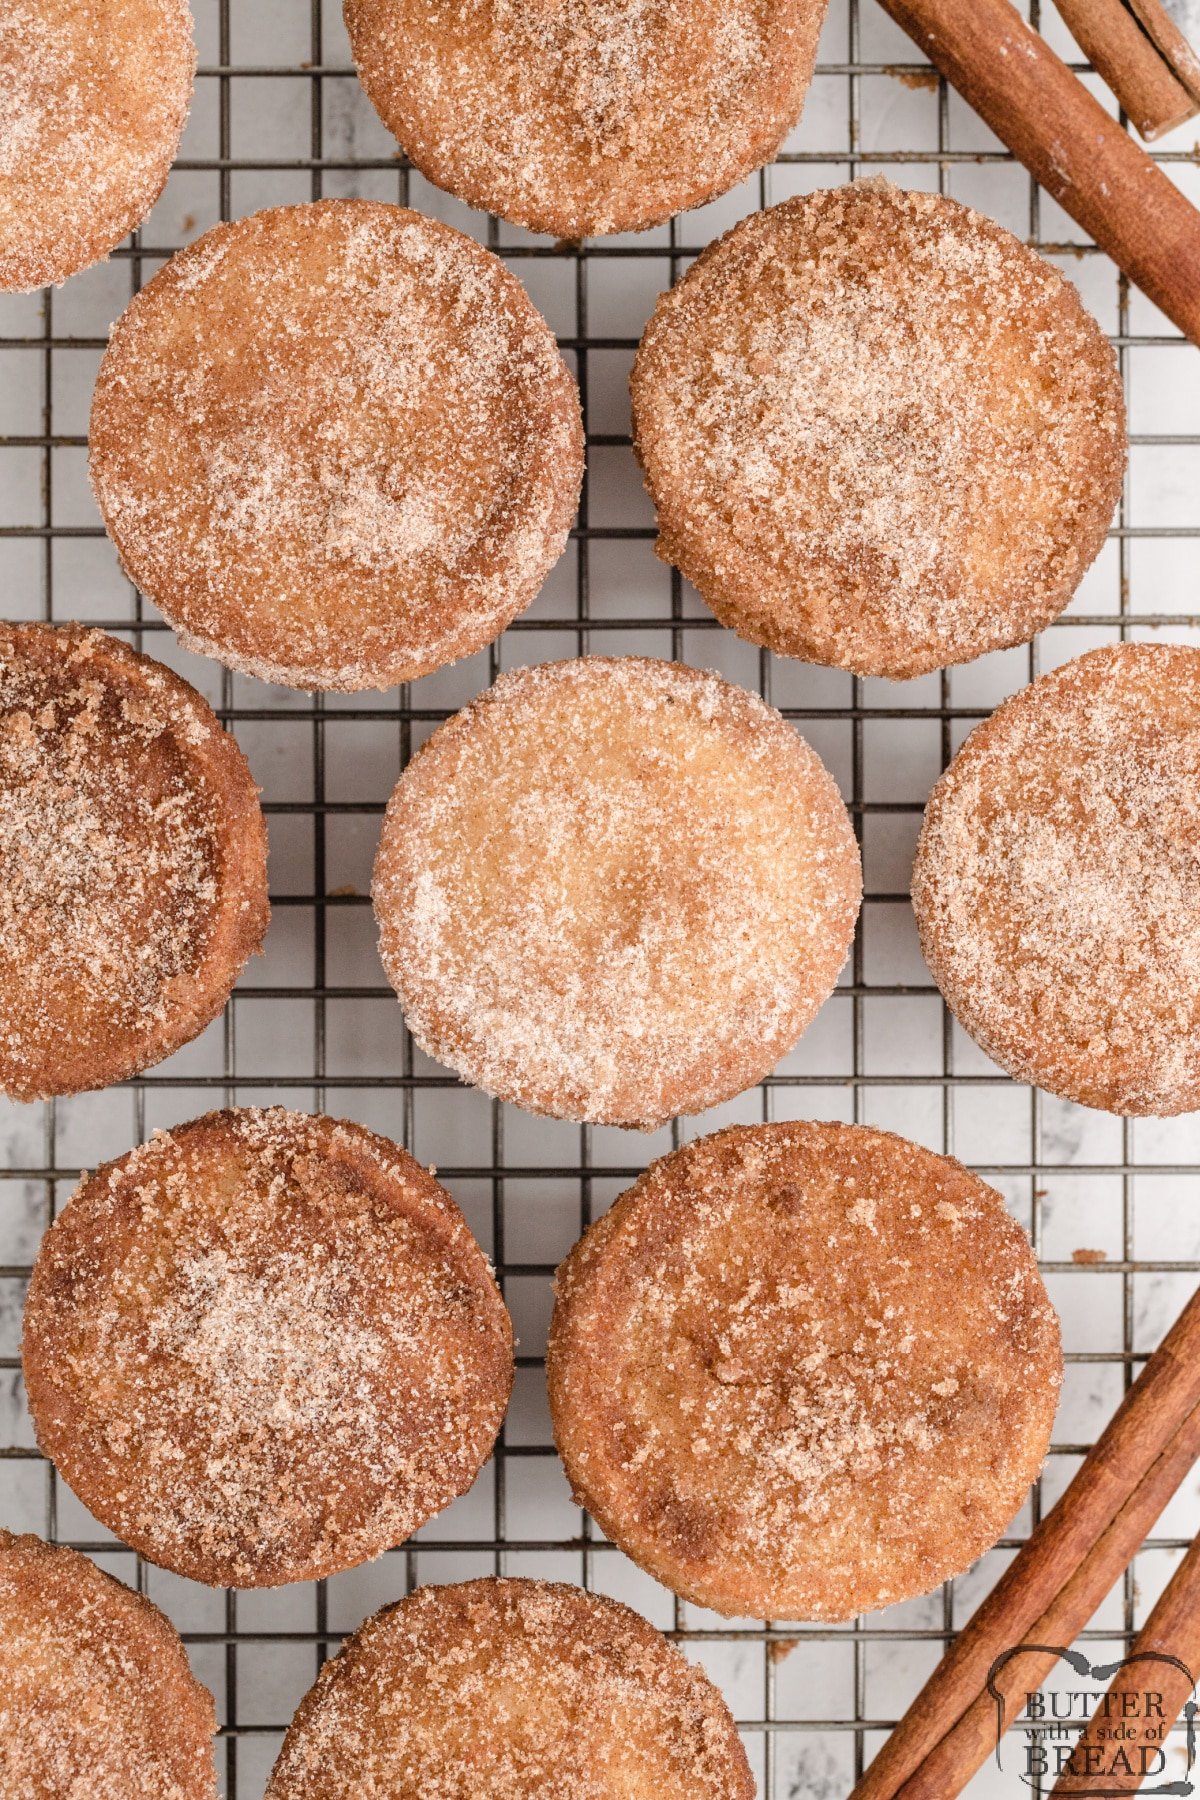 Doughnut muffins coated in cinnamon and sugar